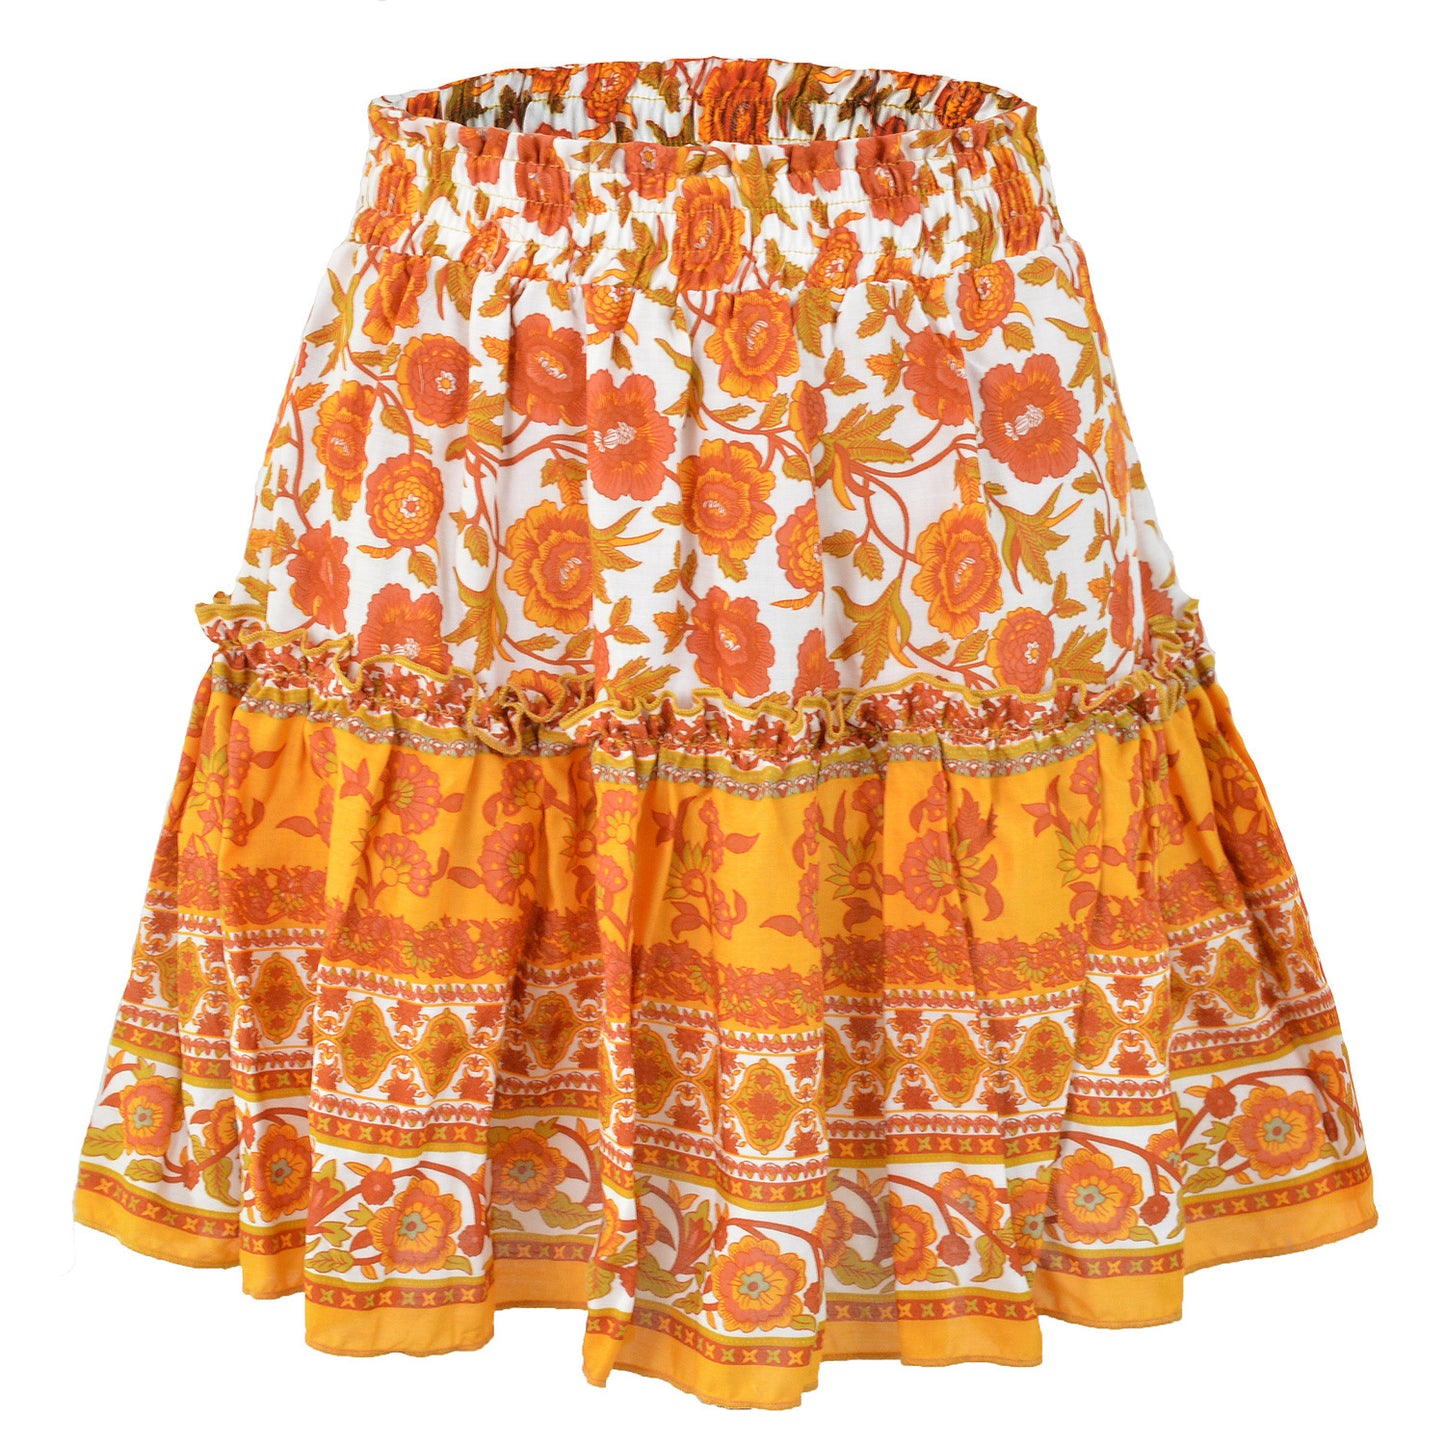 Cowinner Women's Bohemian Flower Print High Waist Ruffle Skirt Flared Boho A-Line Pleated Mini Skirt S-XL